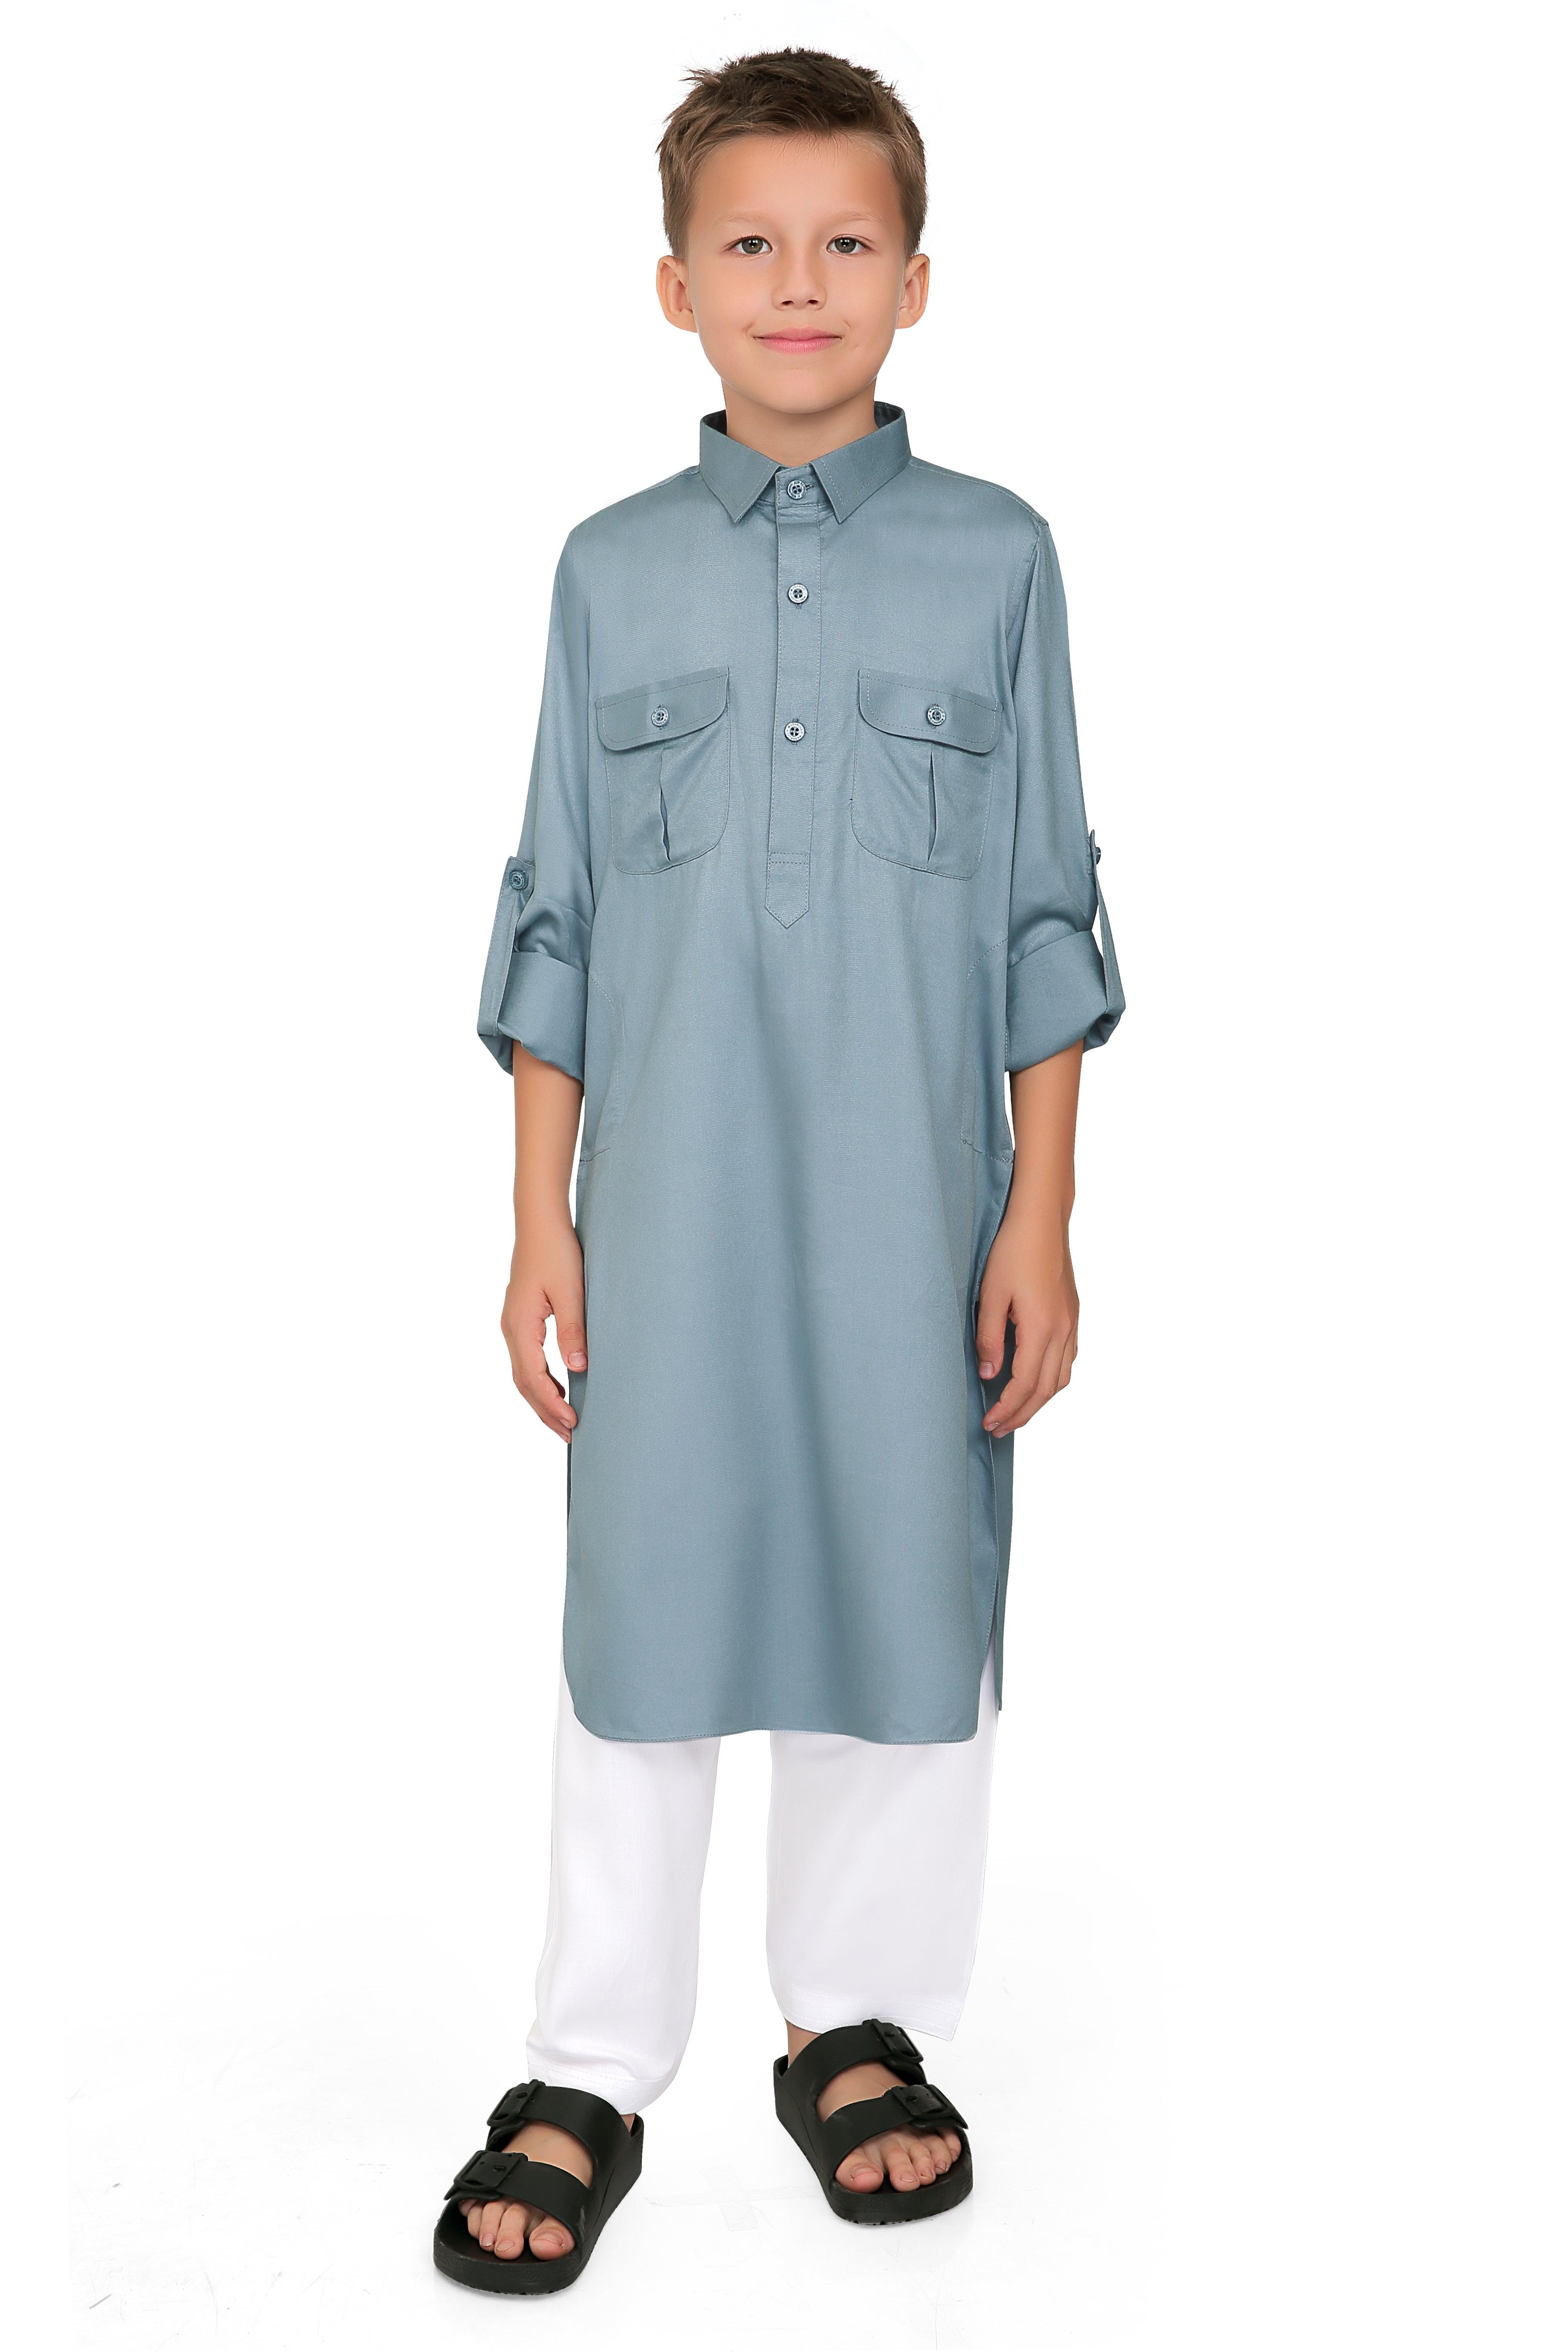 Oday Grey Pathani Suit for Kids - Mashroo